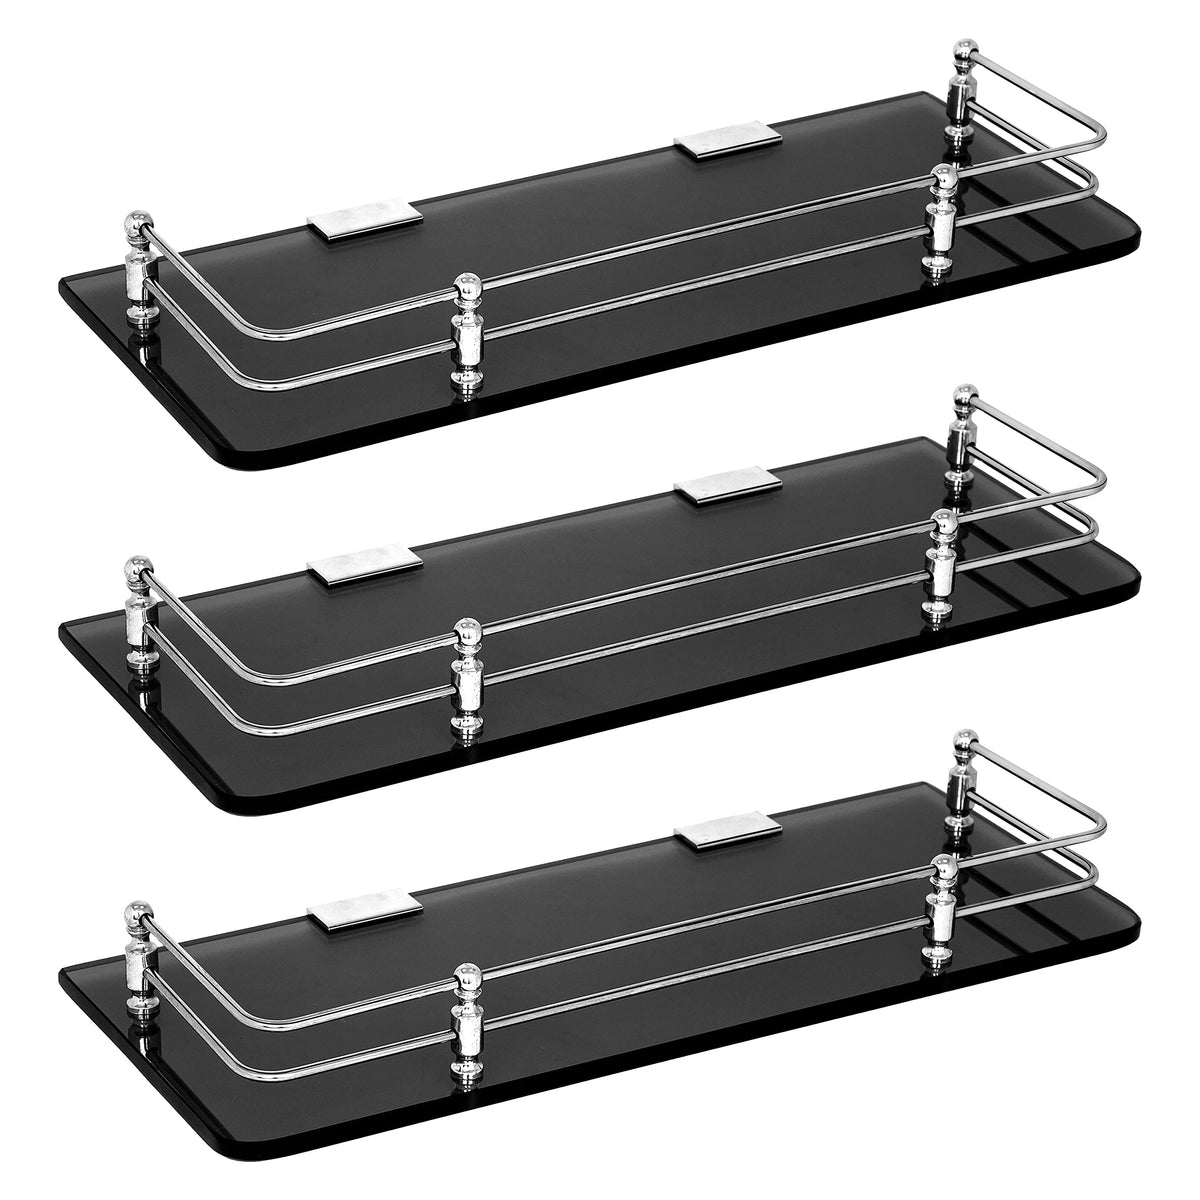 Plantex Premium Black Glass Shelf for Bathroom/Kitchen/Living Room - Bathroom Accessories (Polished, 18x6 Inches) - Pack of 3